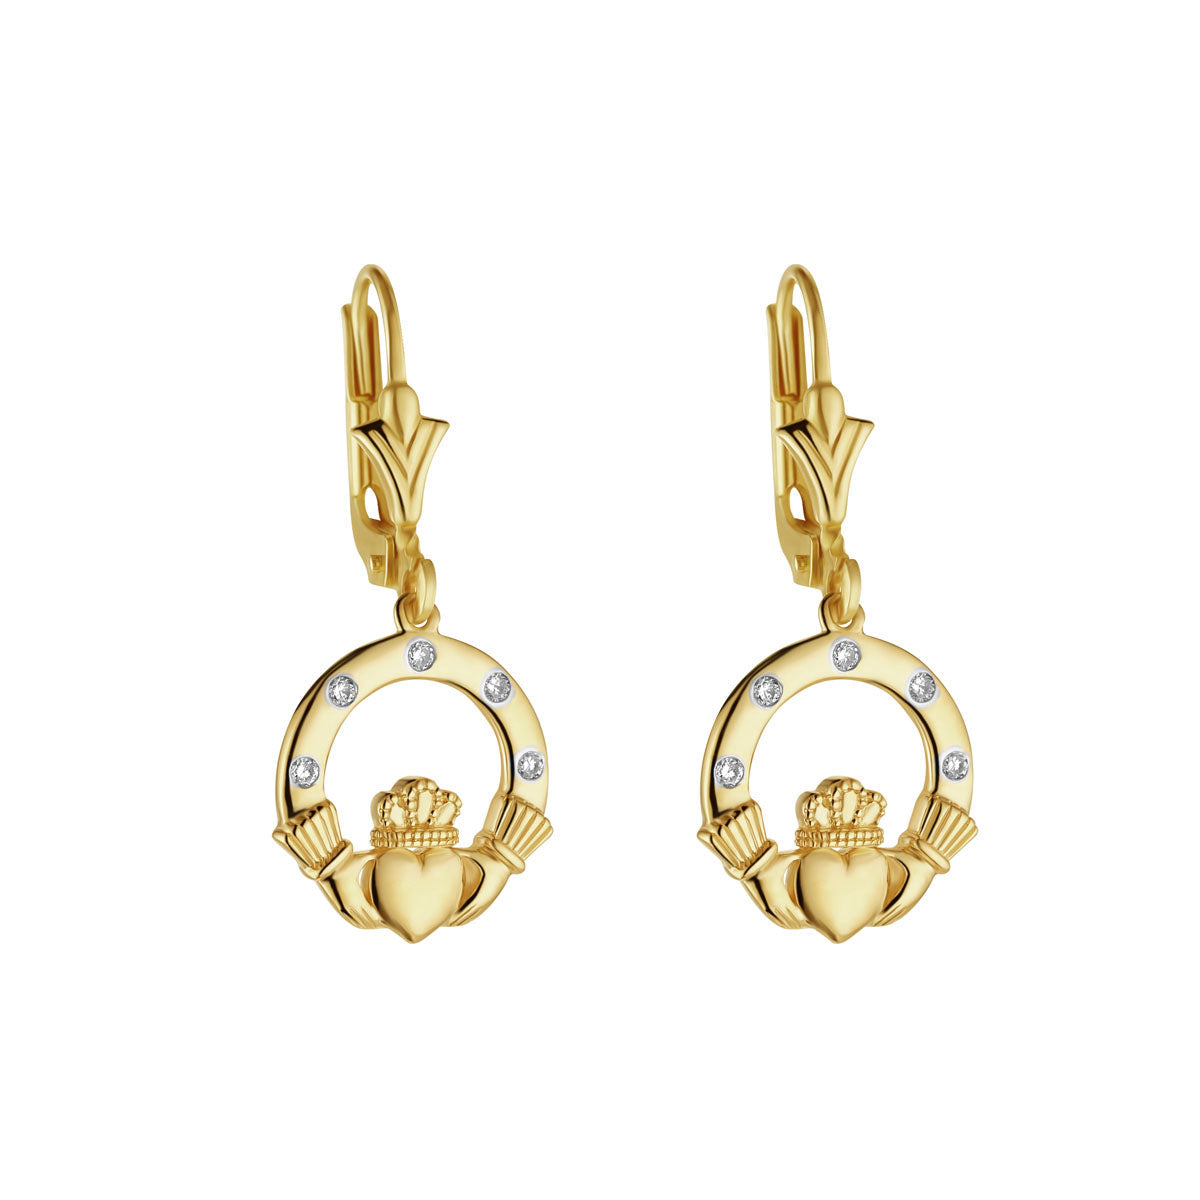 14K Gold Flush Set Diamond Claddagh Earrings S34191 from Solvar Irish Jewellery